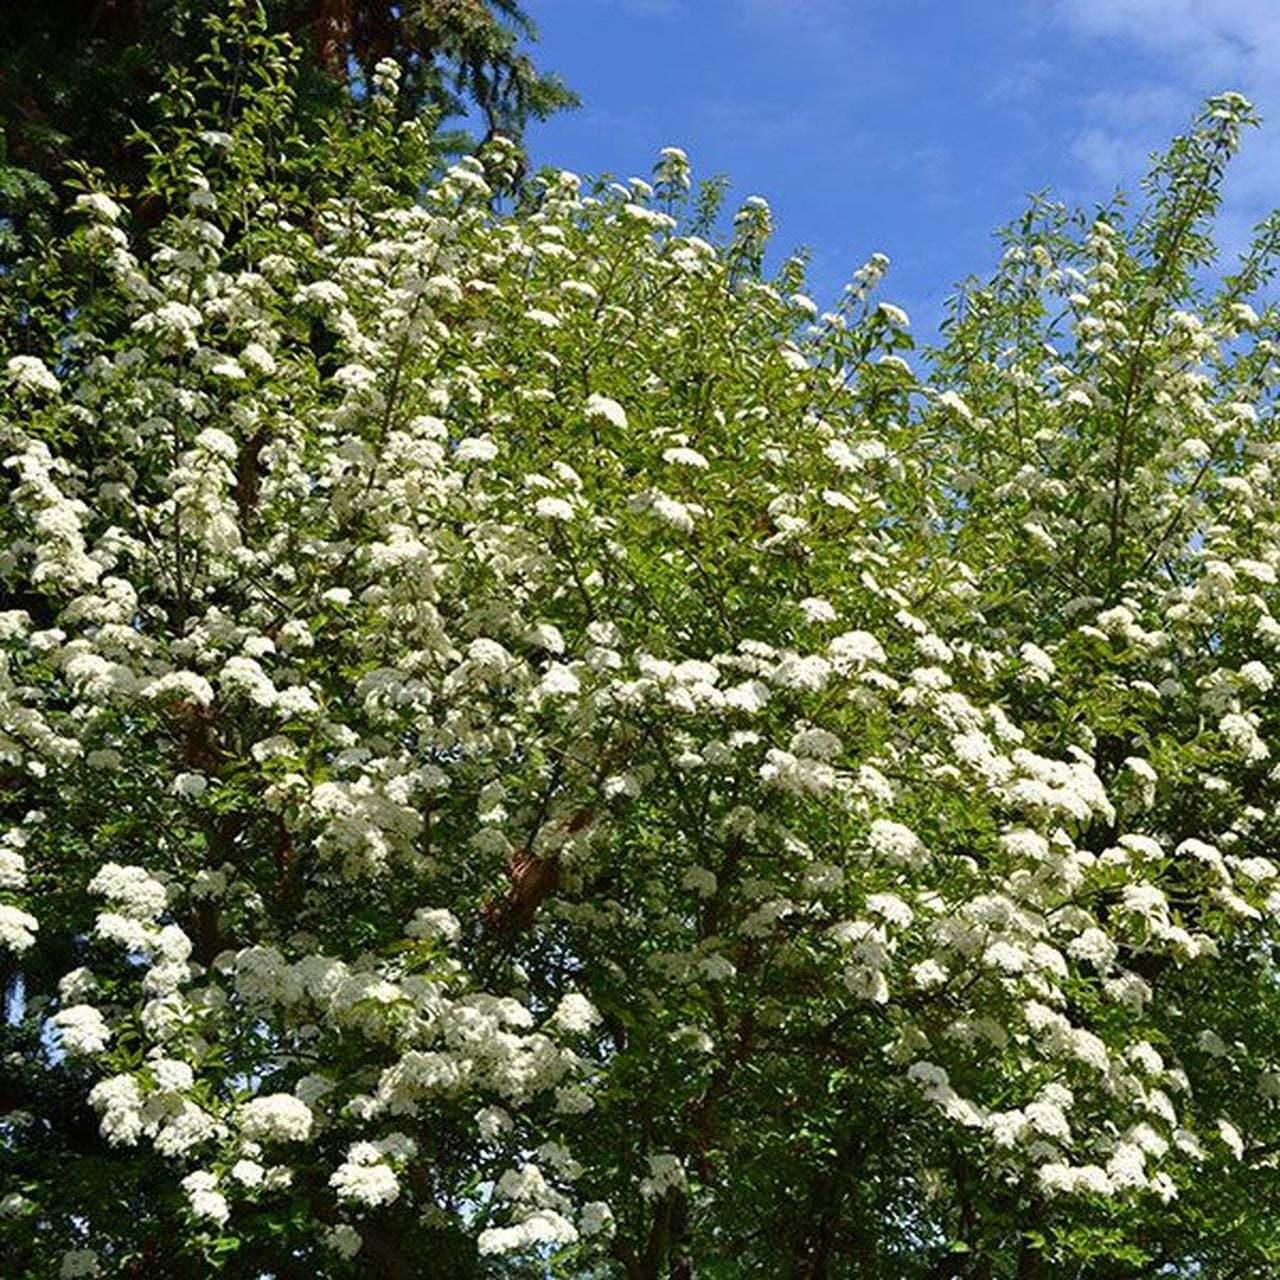 2 Blackhaw Viburnum Shrubs/Trees - 6-12" Tall - Live Plants - 4" Pots - Viburnum prunifolium - The Nursery Center